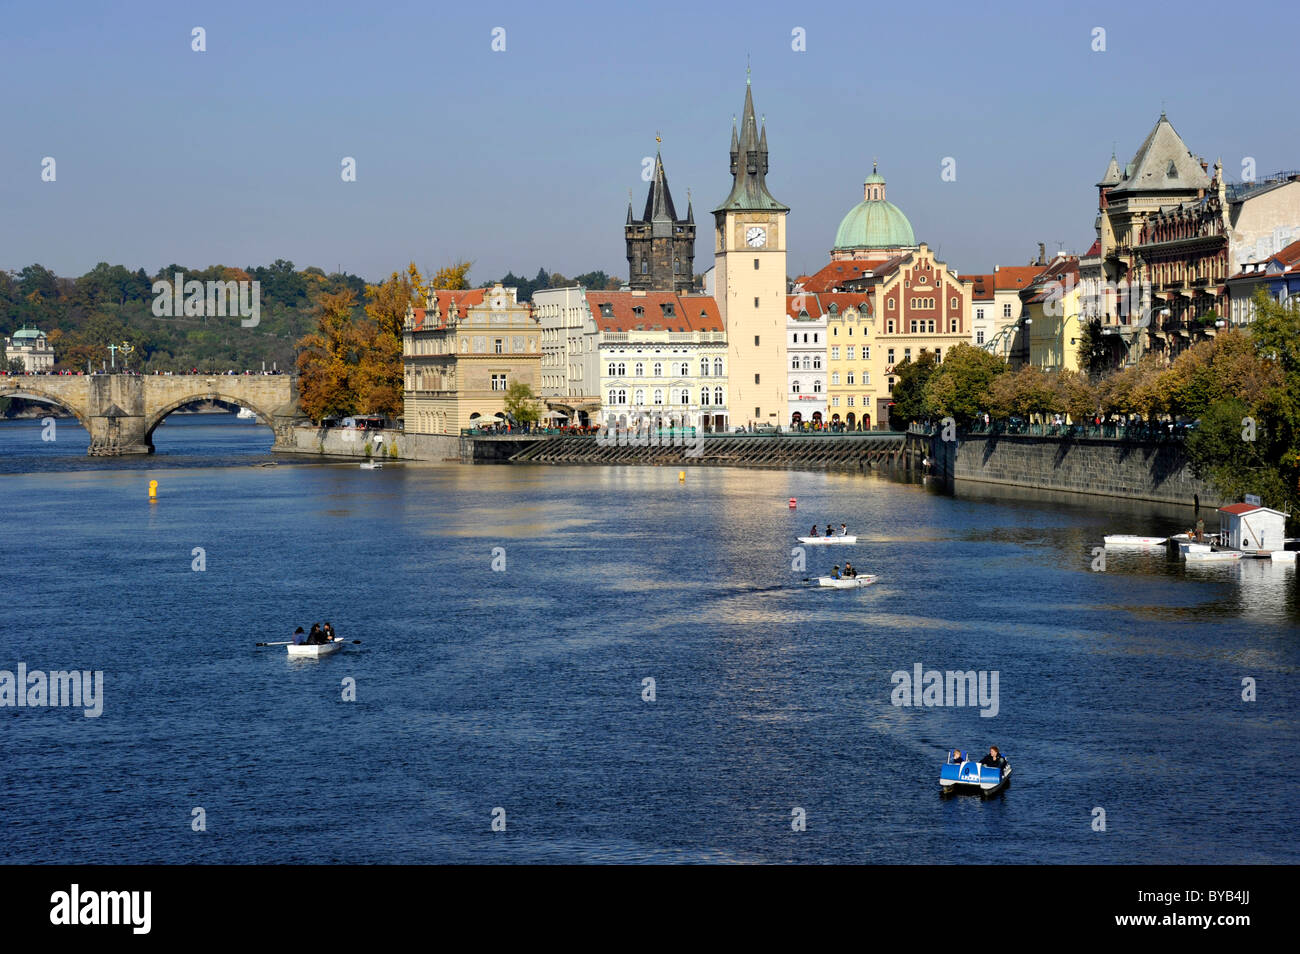 Vltava river, Charles Bridge, Smetana Museum in the former waterworks, Old Town Bridge Tower, water tower Stock Photo